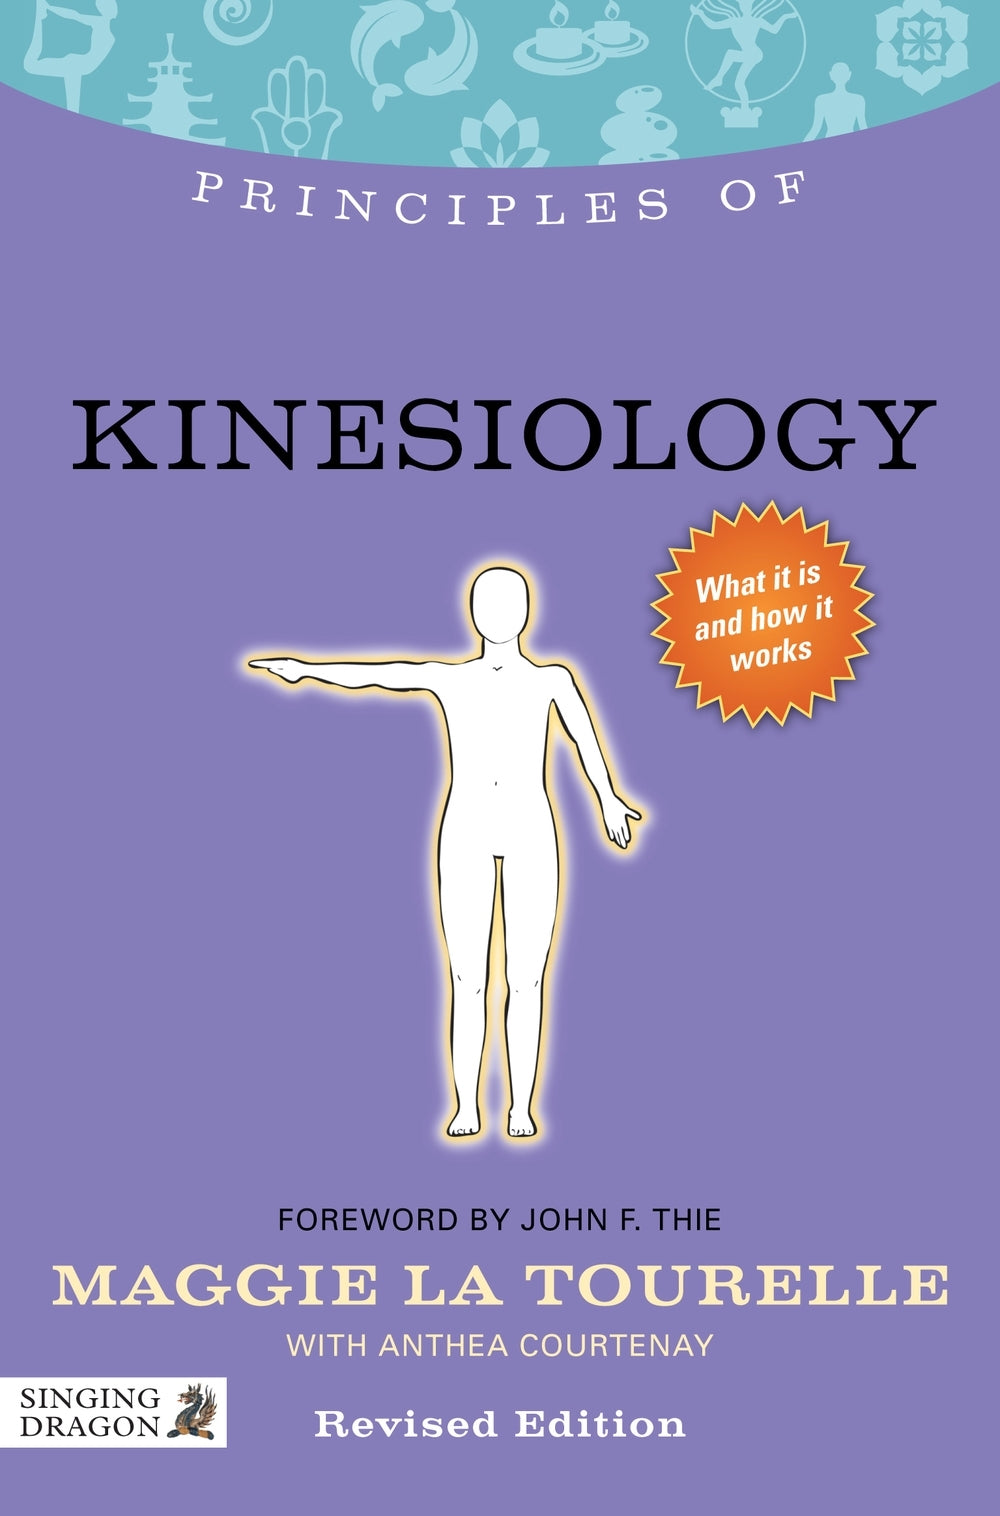 Principles of Kinesiology by John F. Thie, Maggie La La Tourelle